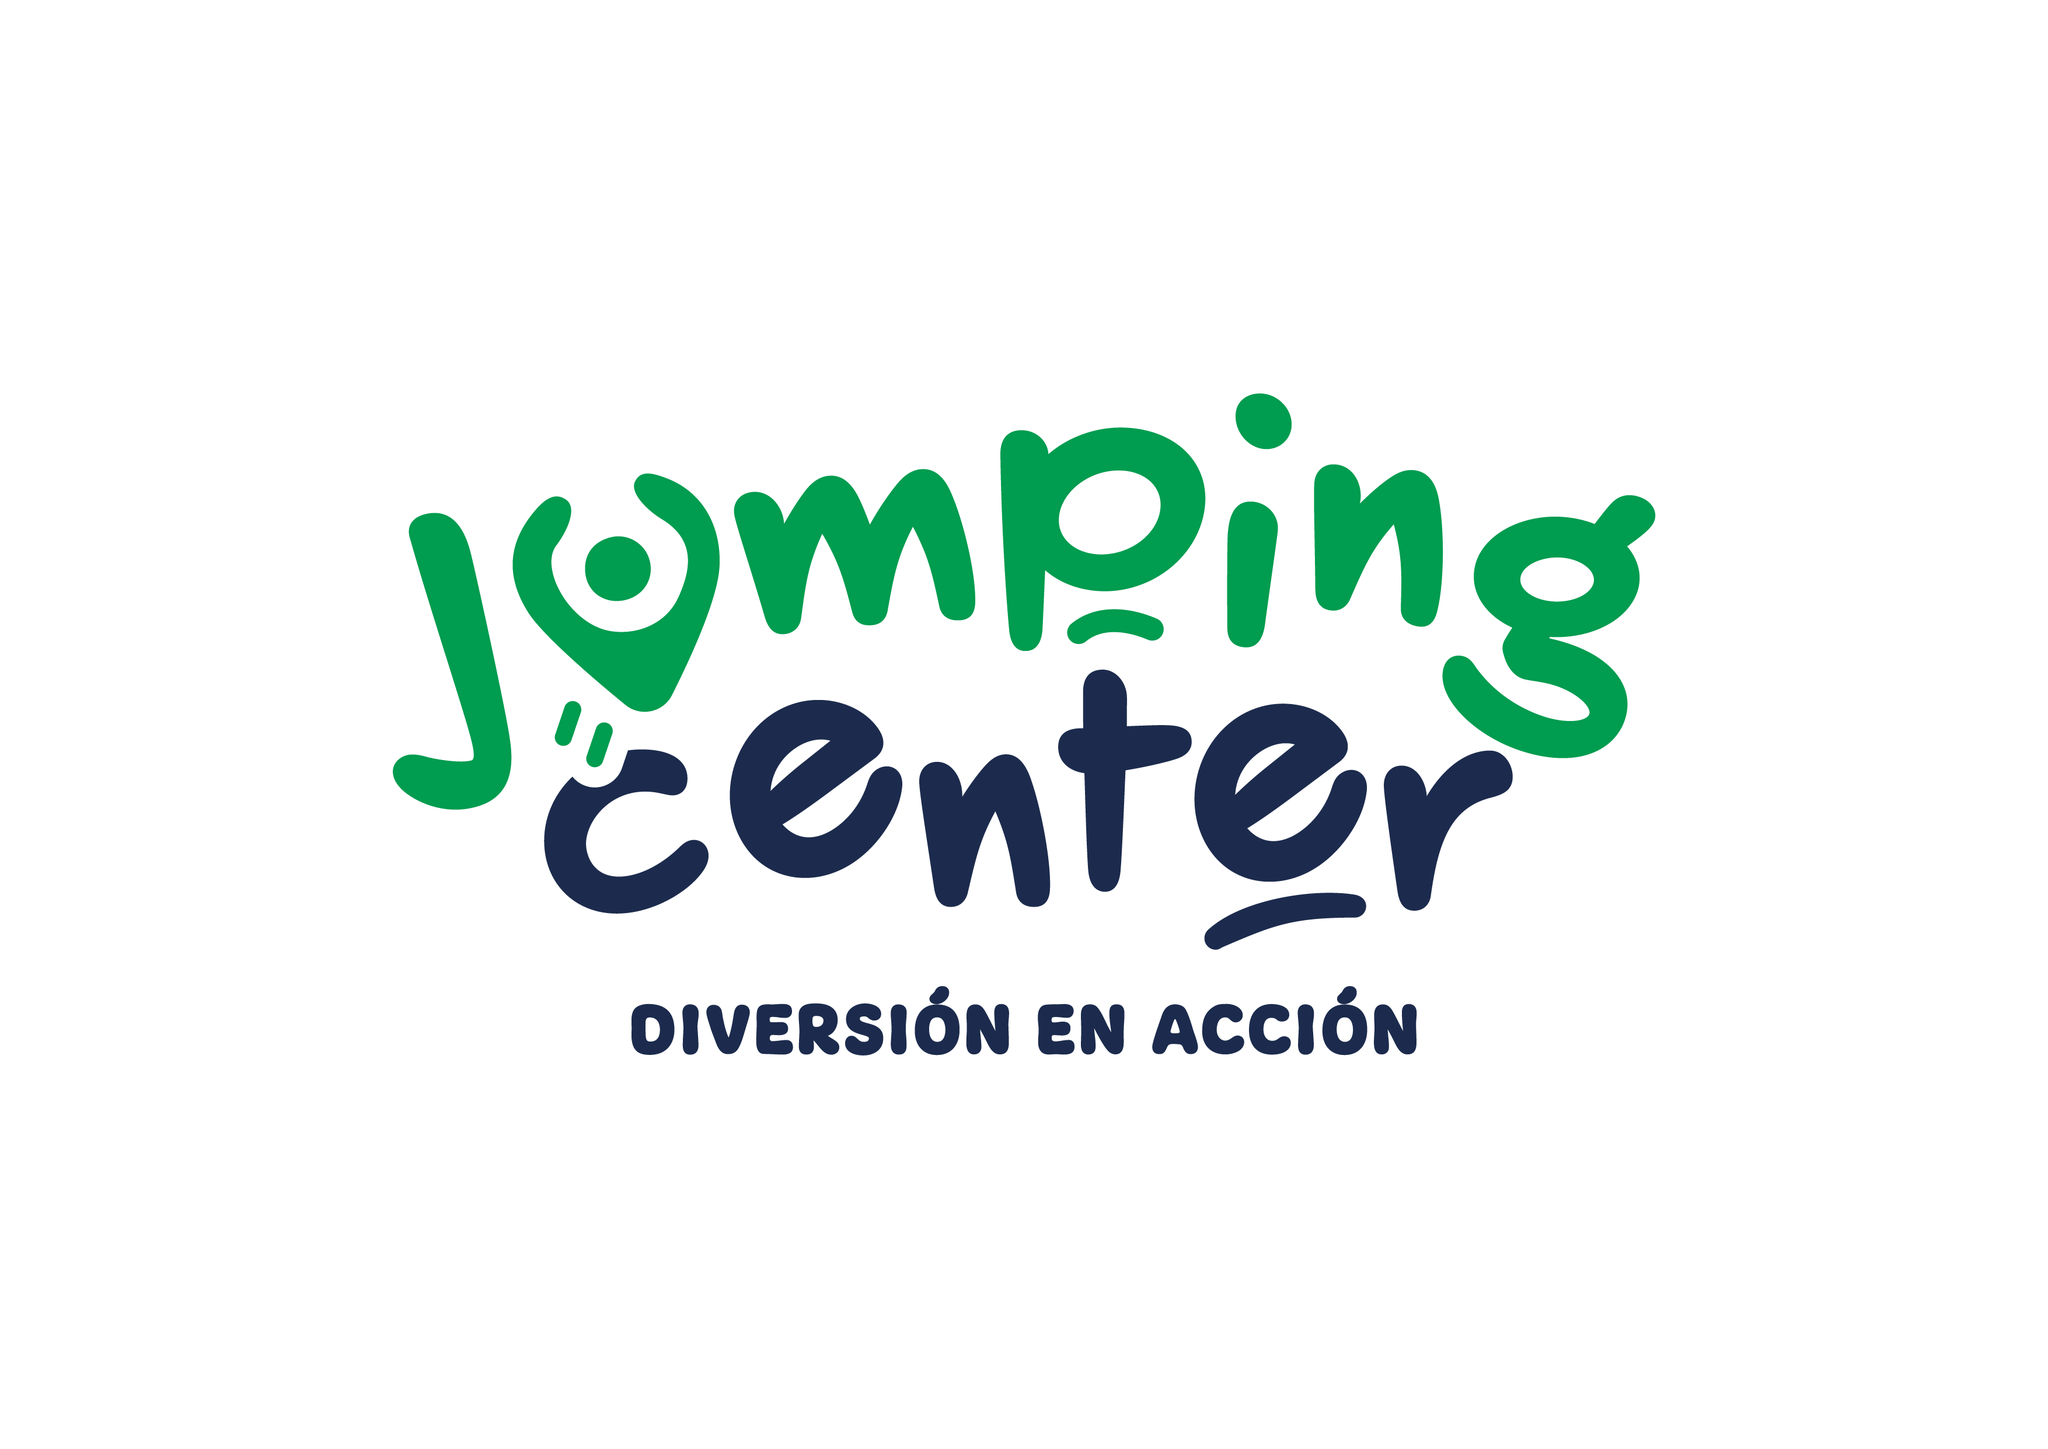 Jumping Center